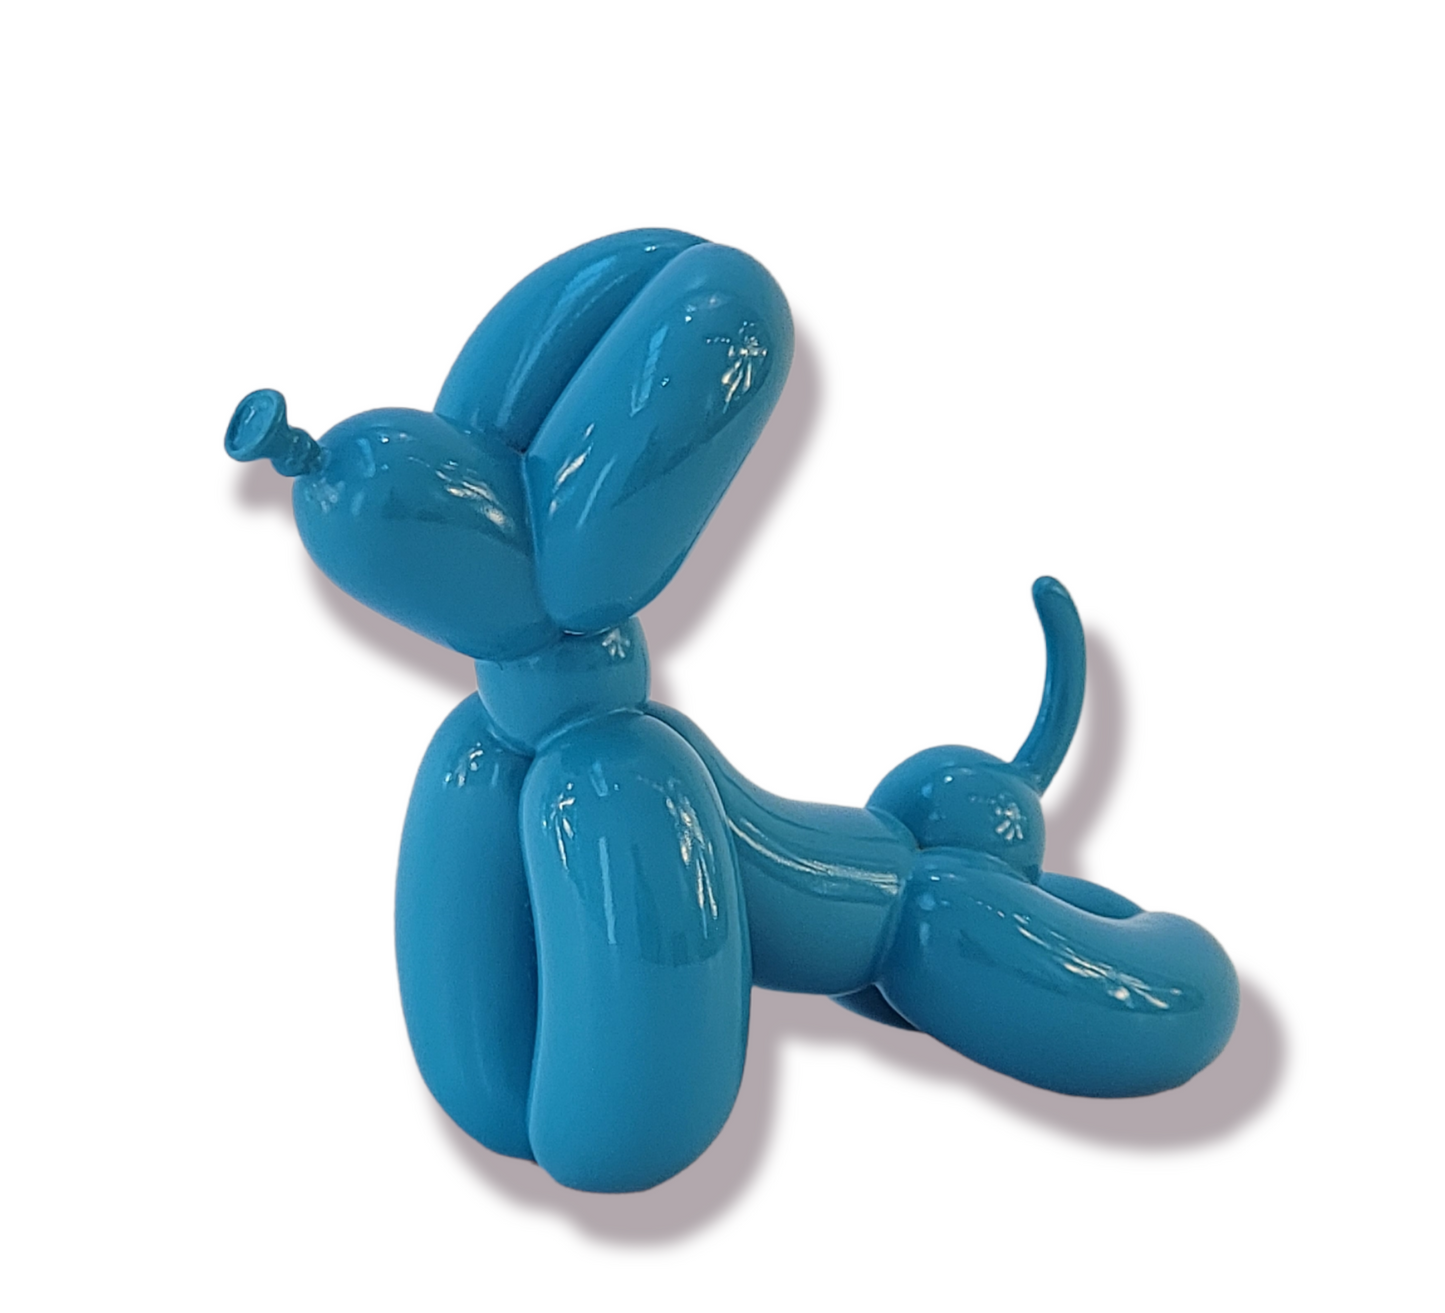 Stretching Balloon Dog Blue Mini 2020